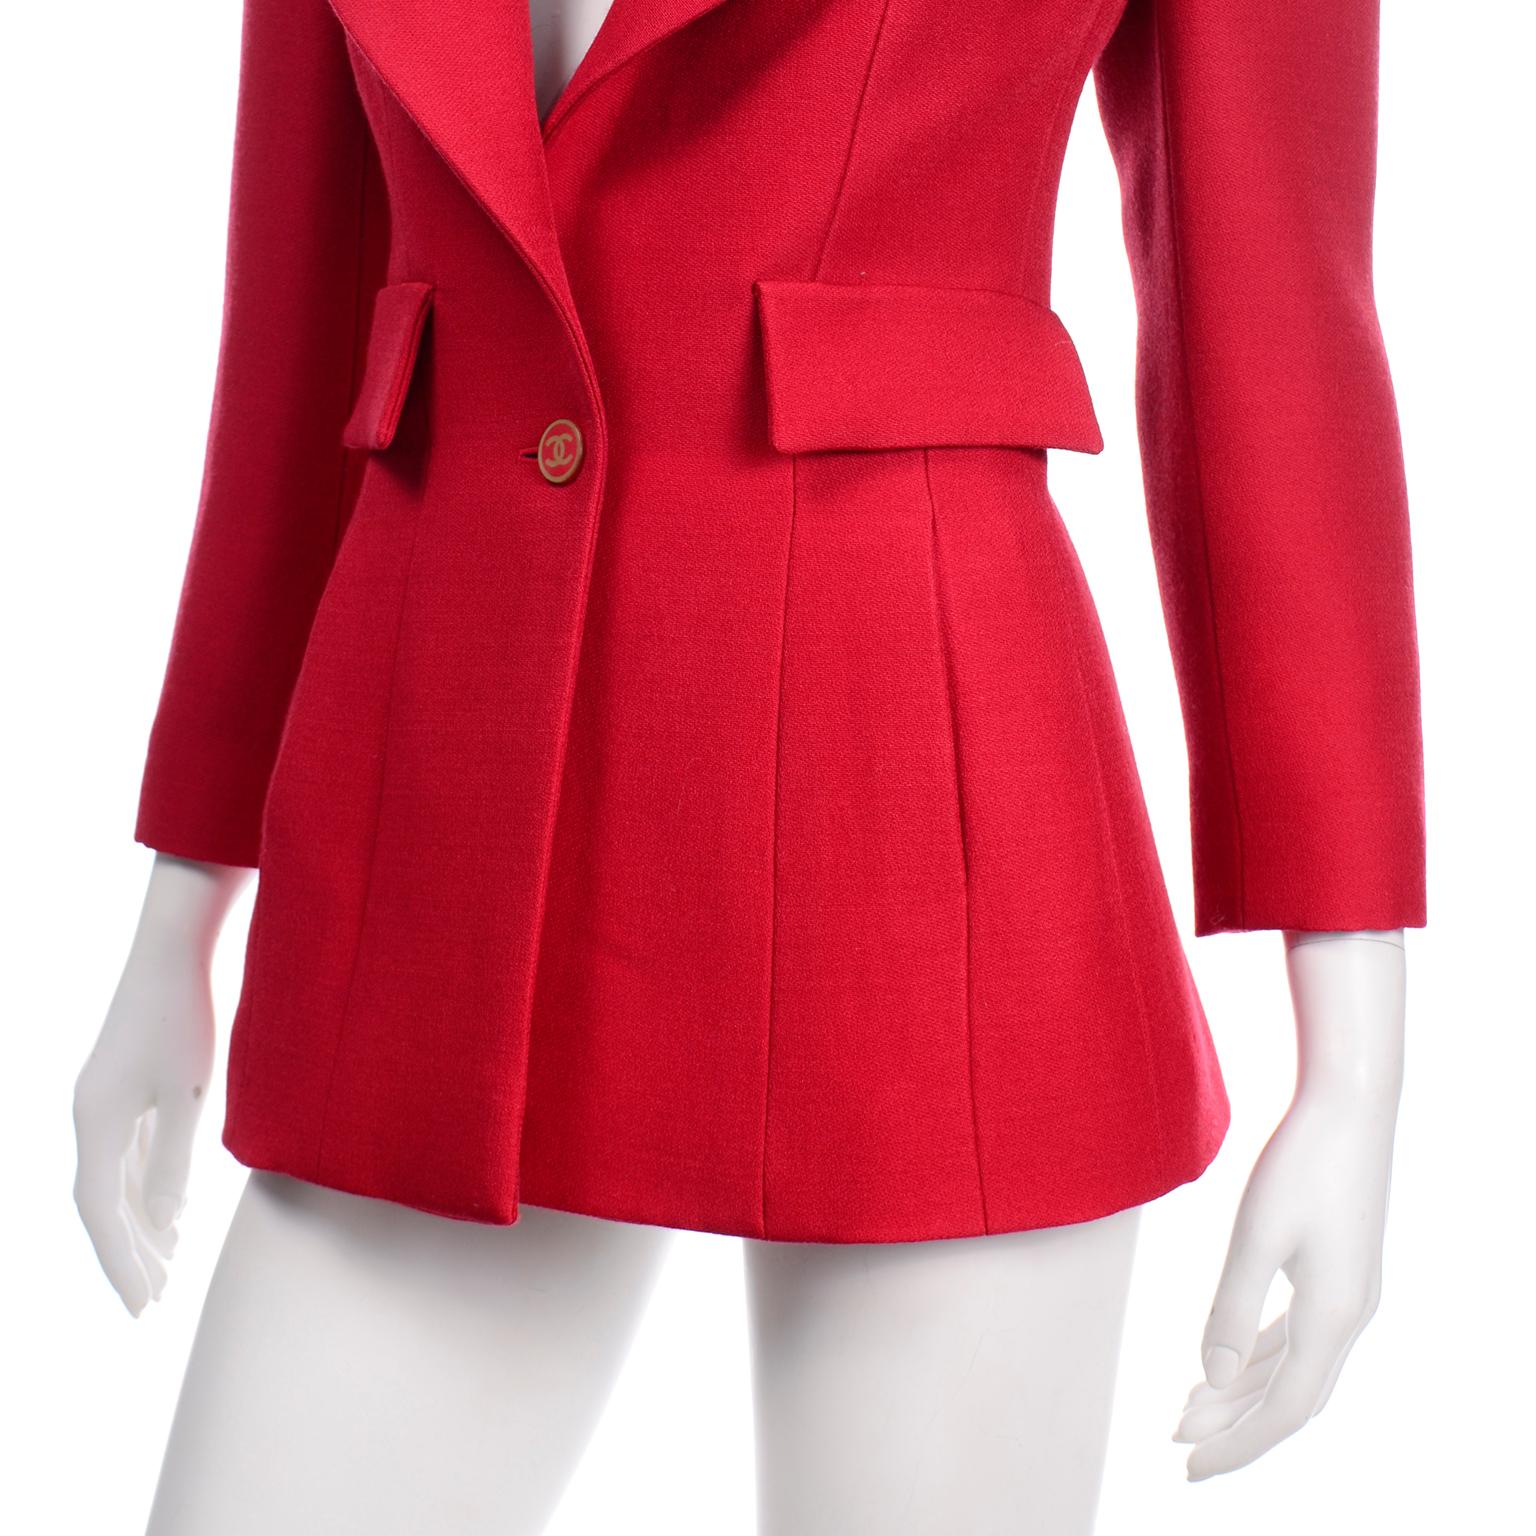 2001 Red Wool Blend Chanel Blazer Jacket W Notch Collar and CC Button Closure 3